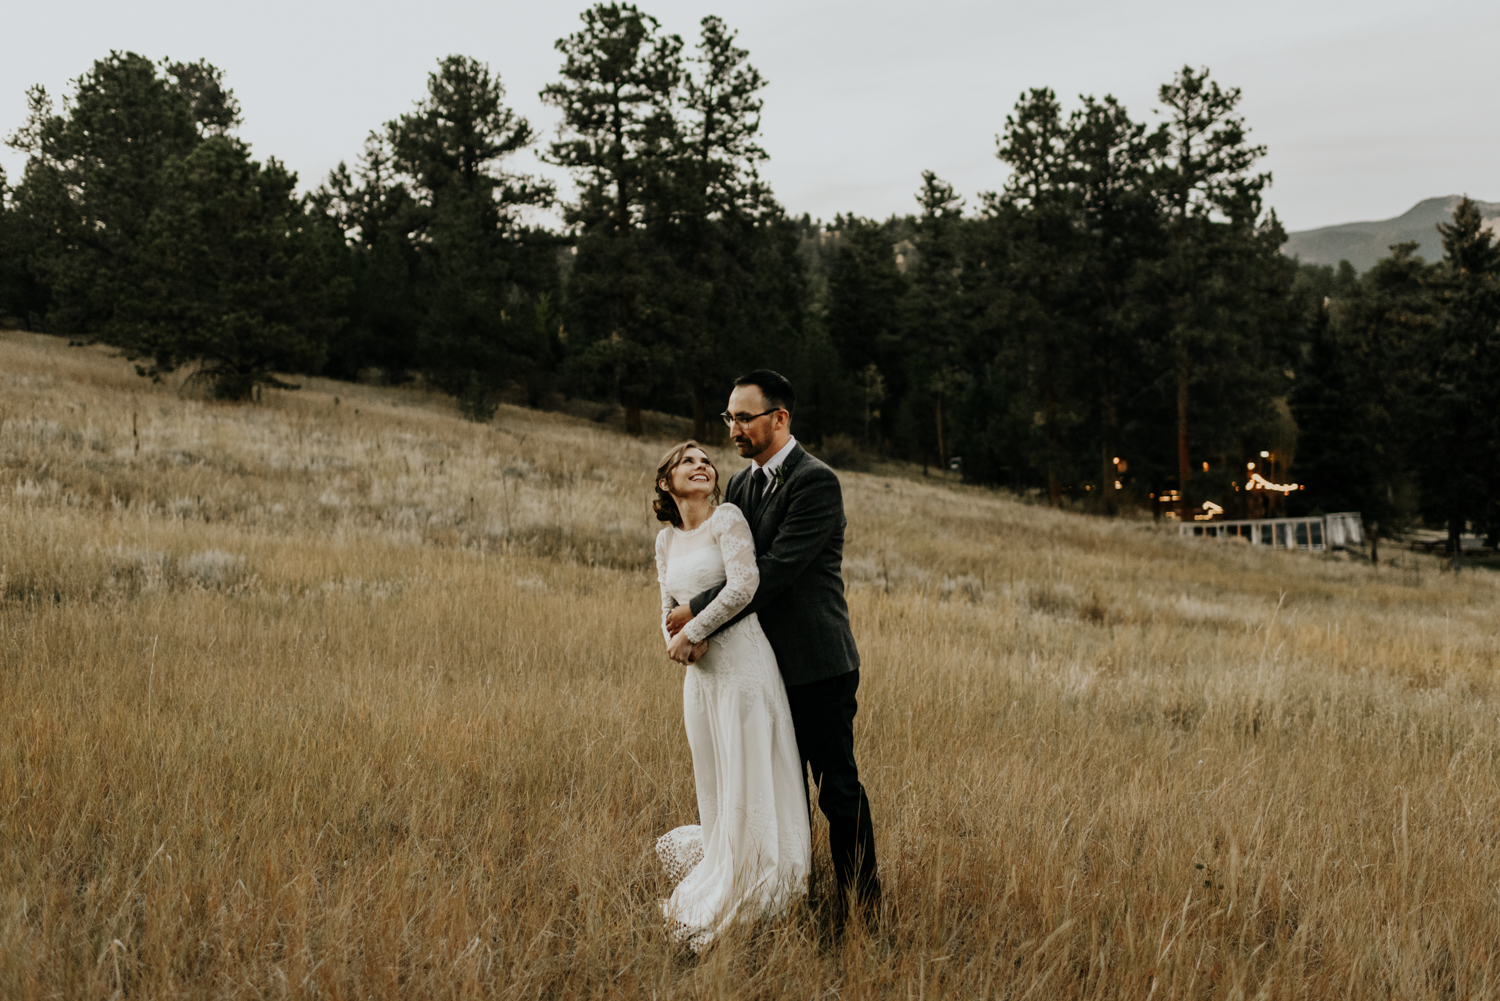 Intimate Mountain Wedding Photographer, Meadow Creek, Pine Colorado